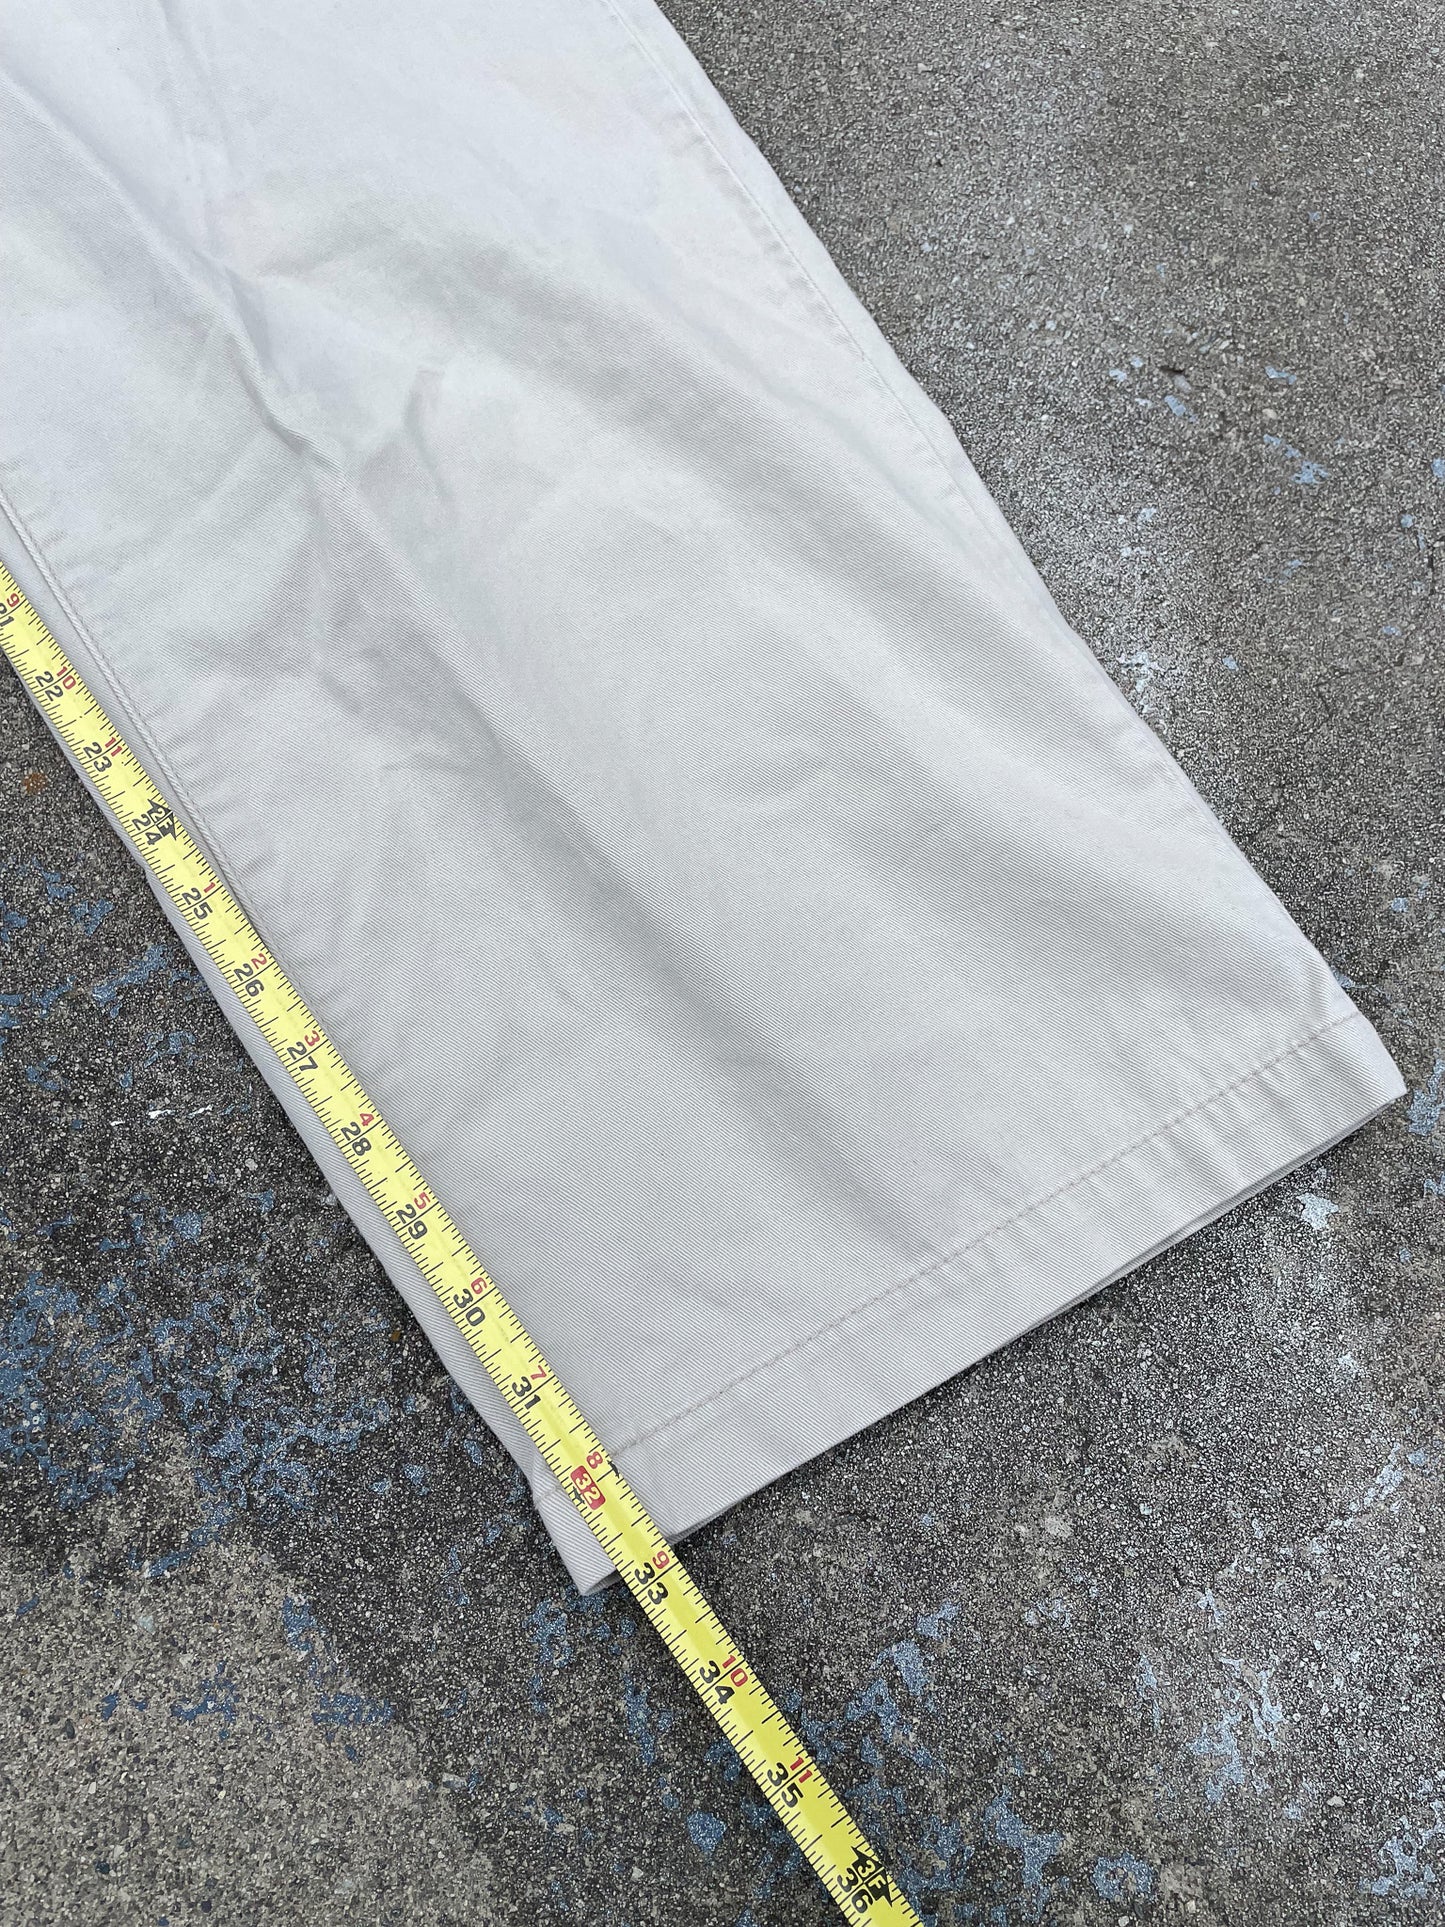 Levi's Silvertab Khaki Pants—[34x34]